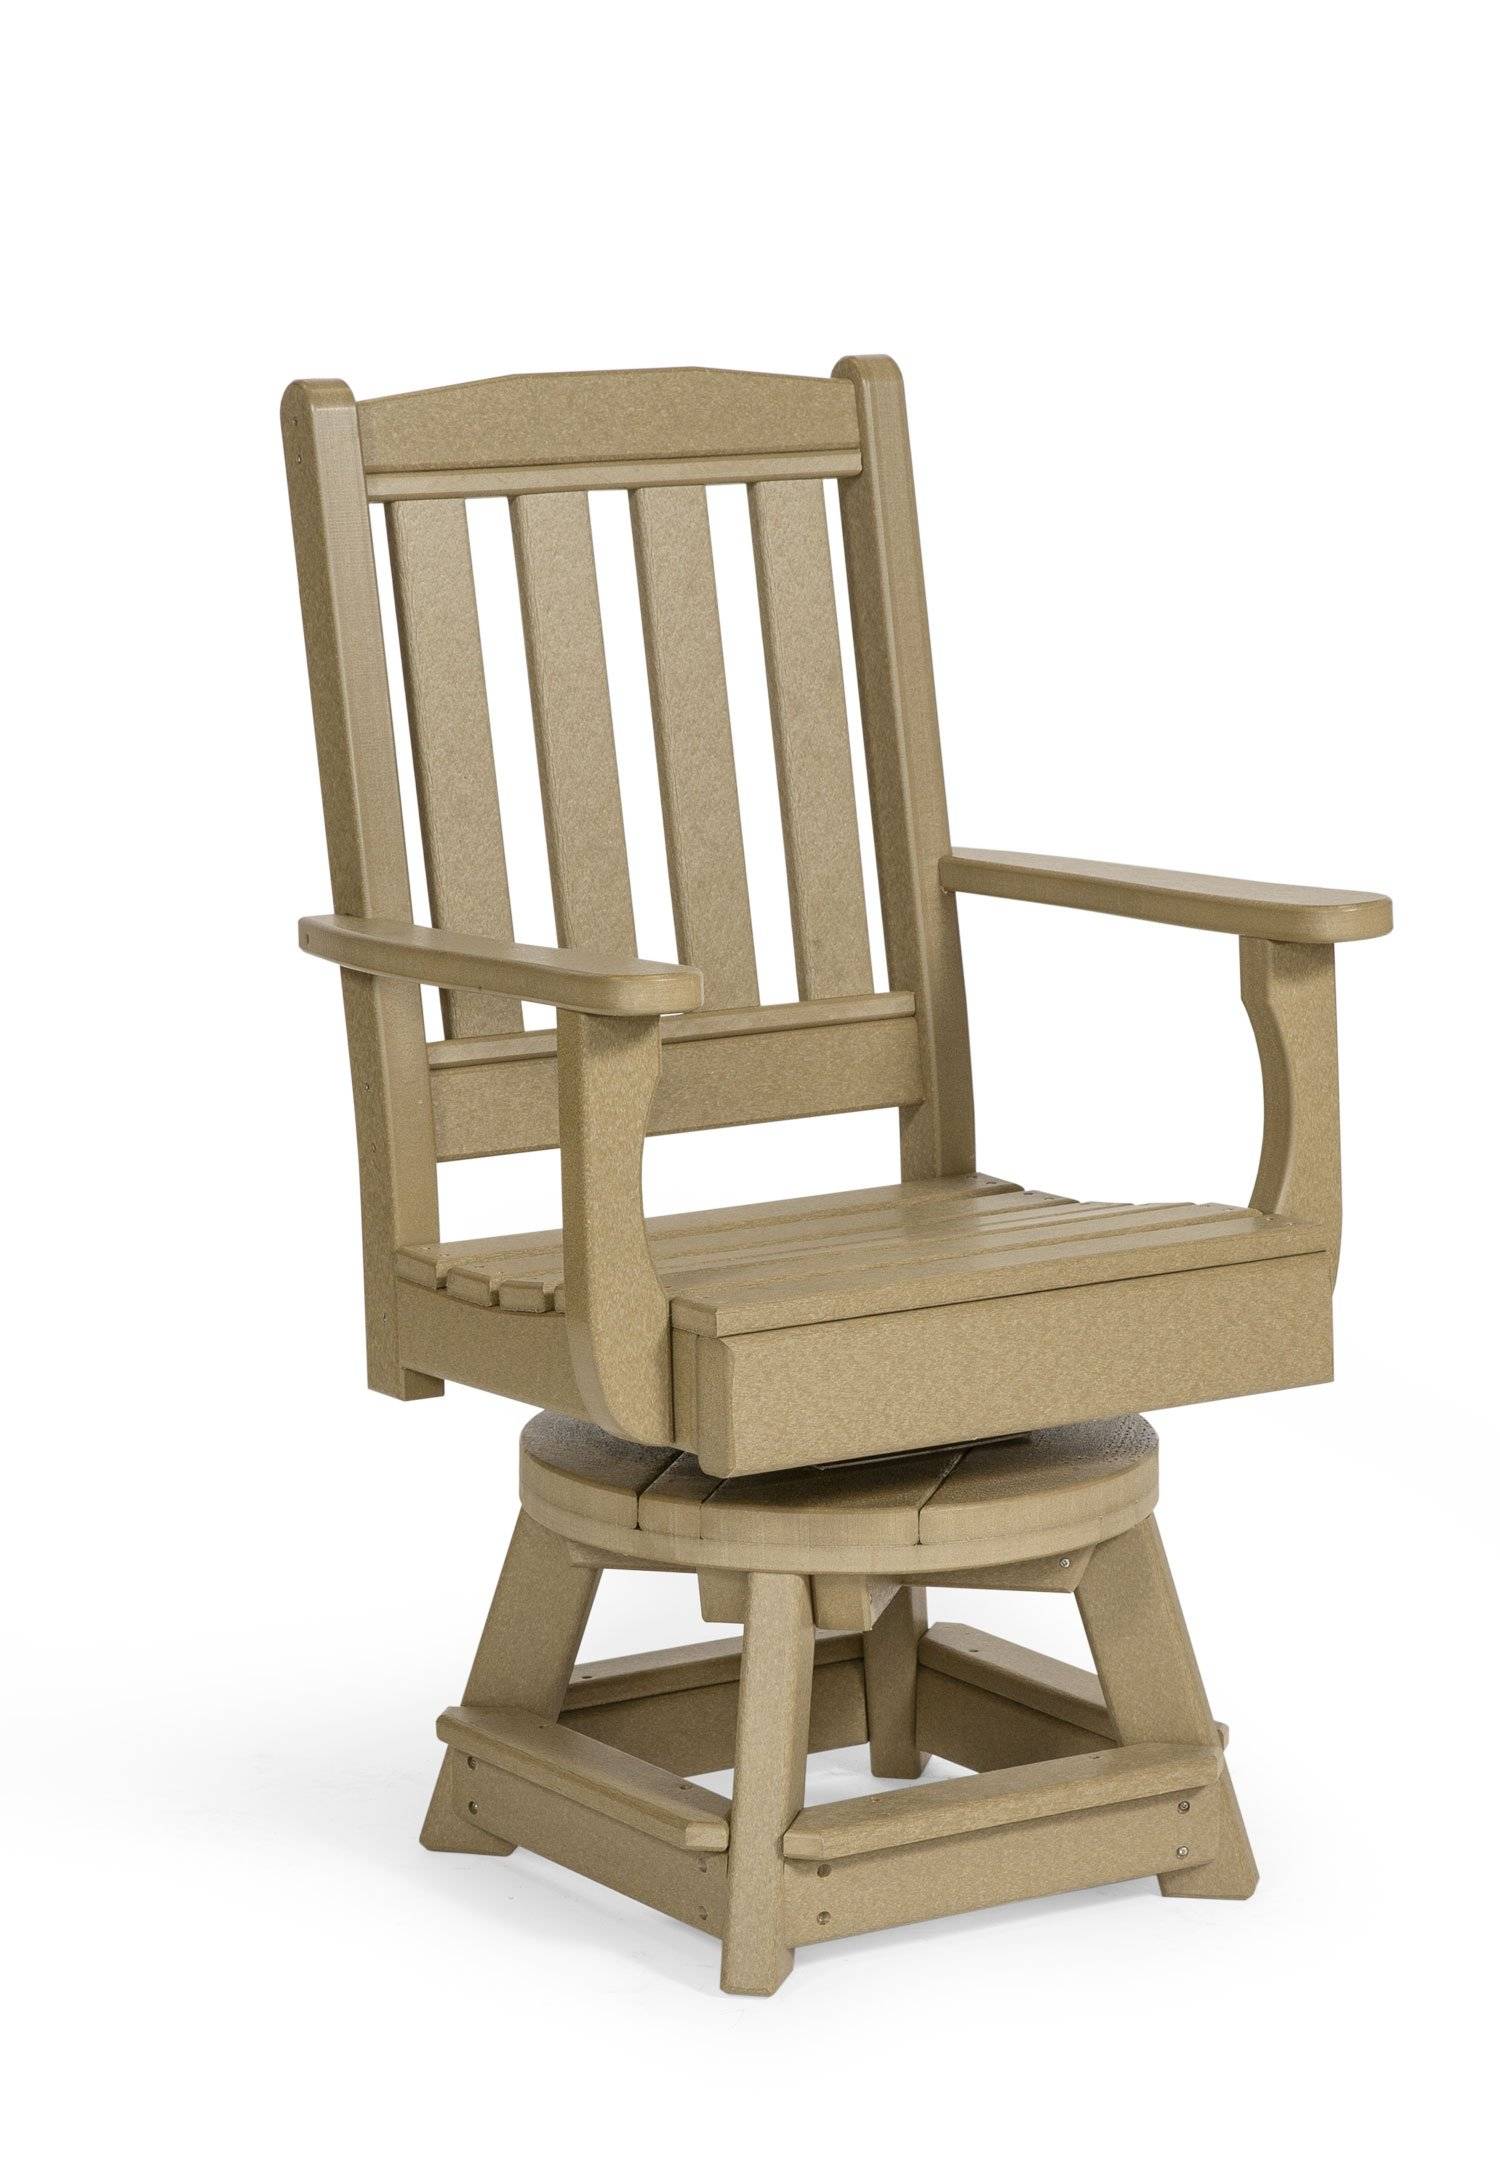 Outdoor Diningenglish Garden Chair Adirondack Furniture